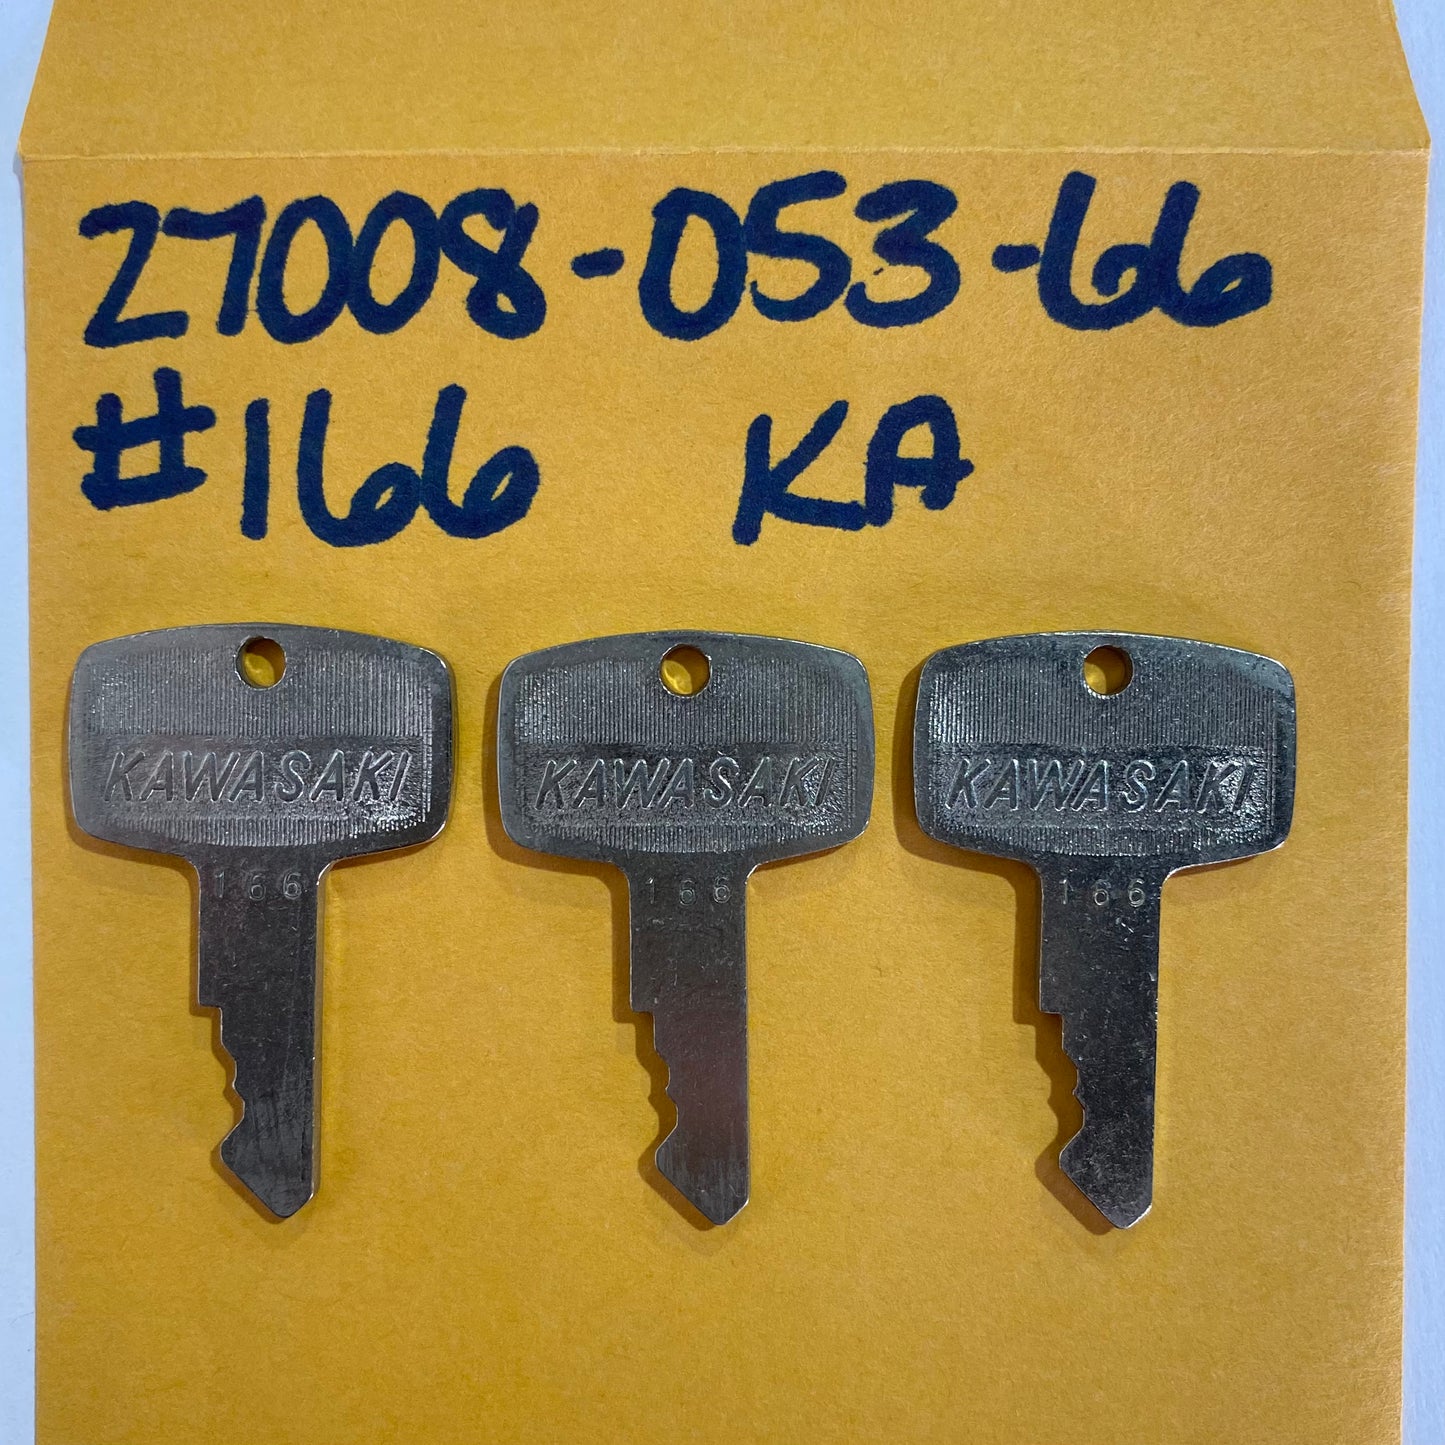 Kawasaki Key Set #166 27008-053-66 (set of 3)